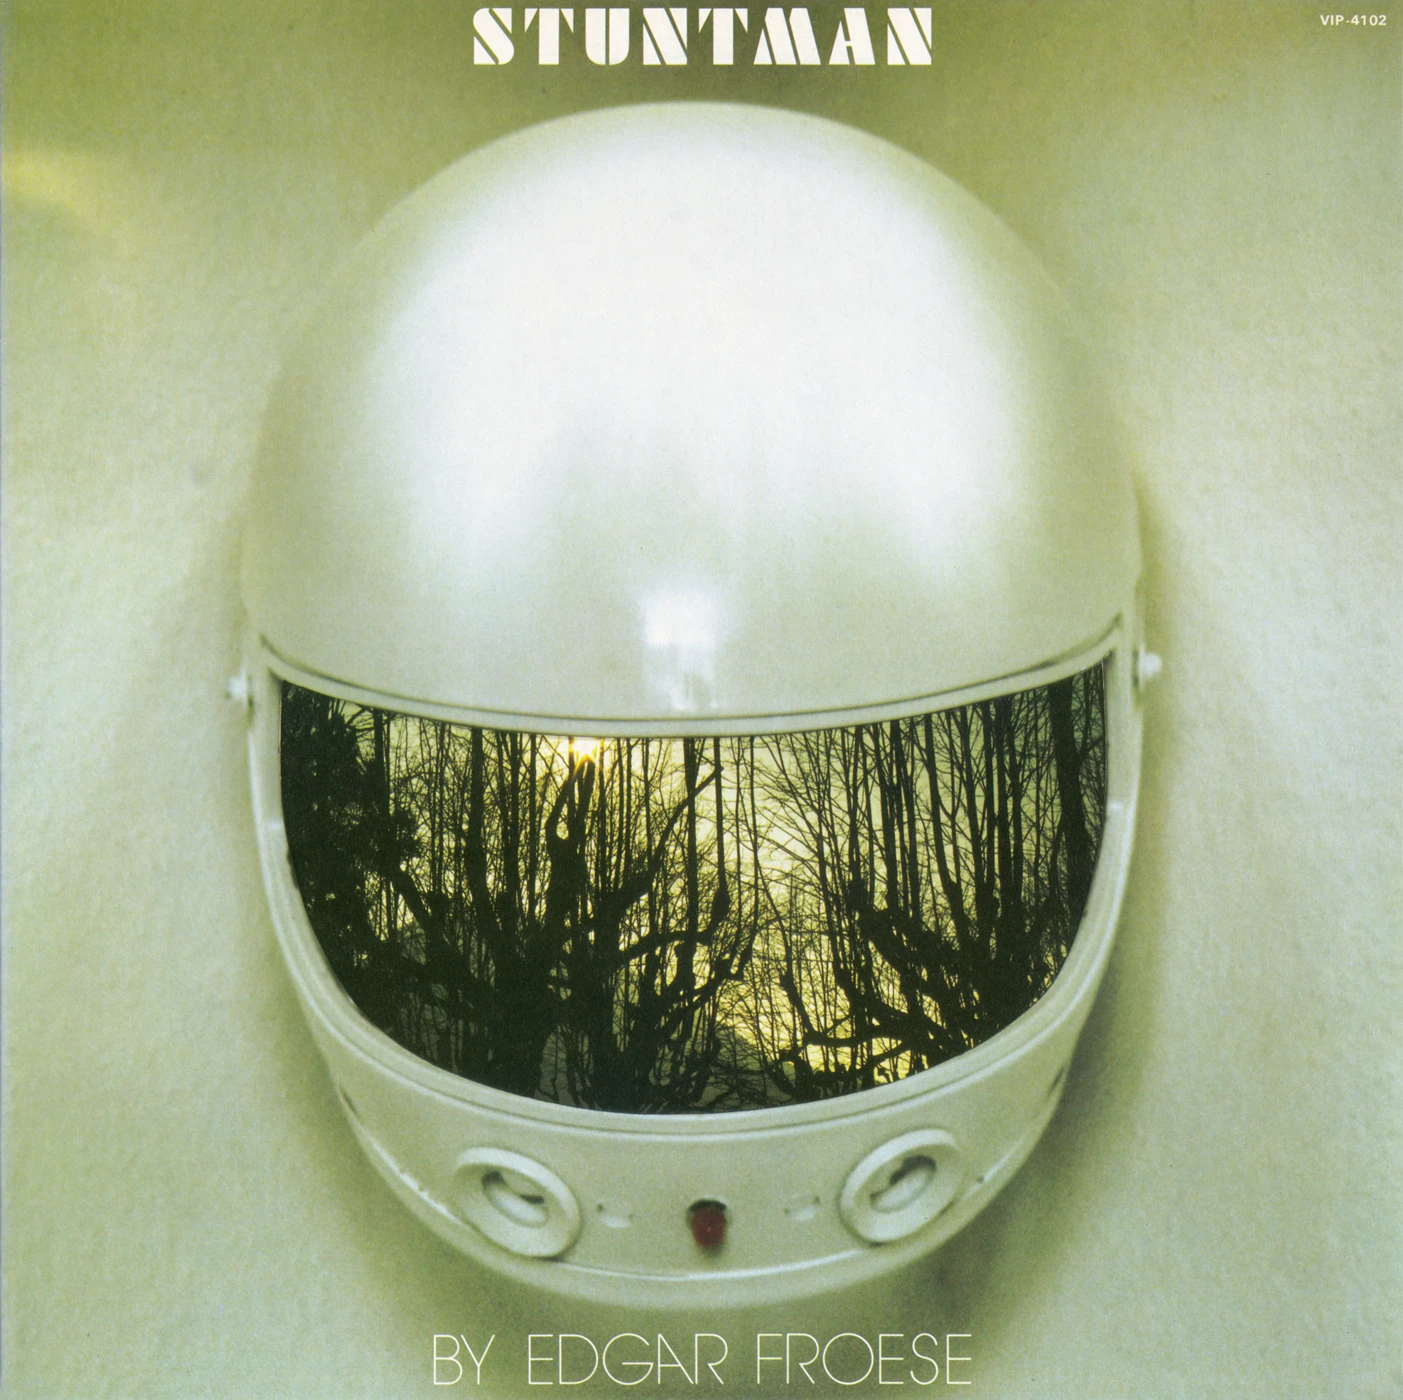 Stuntman – Edgar Froese